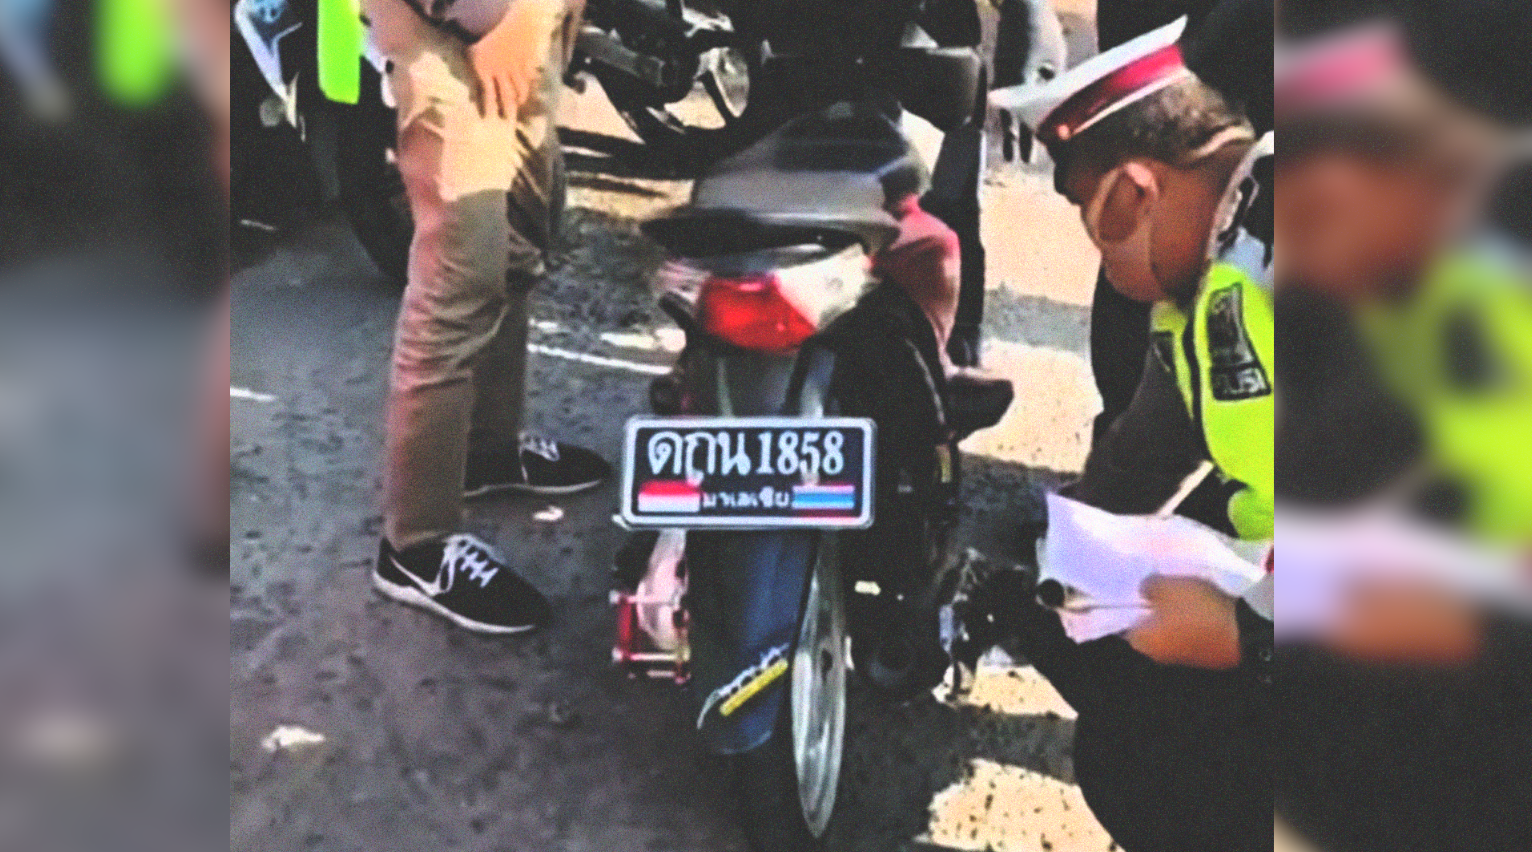 Motor Thailand ditilang di Indonesia. (Foto: Dok @makassar_iinfo)